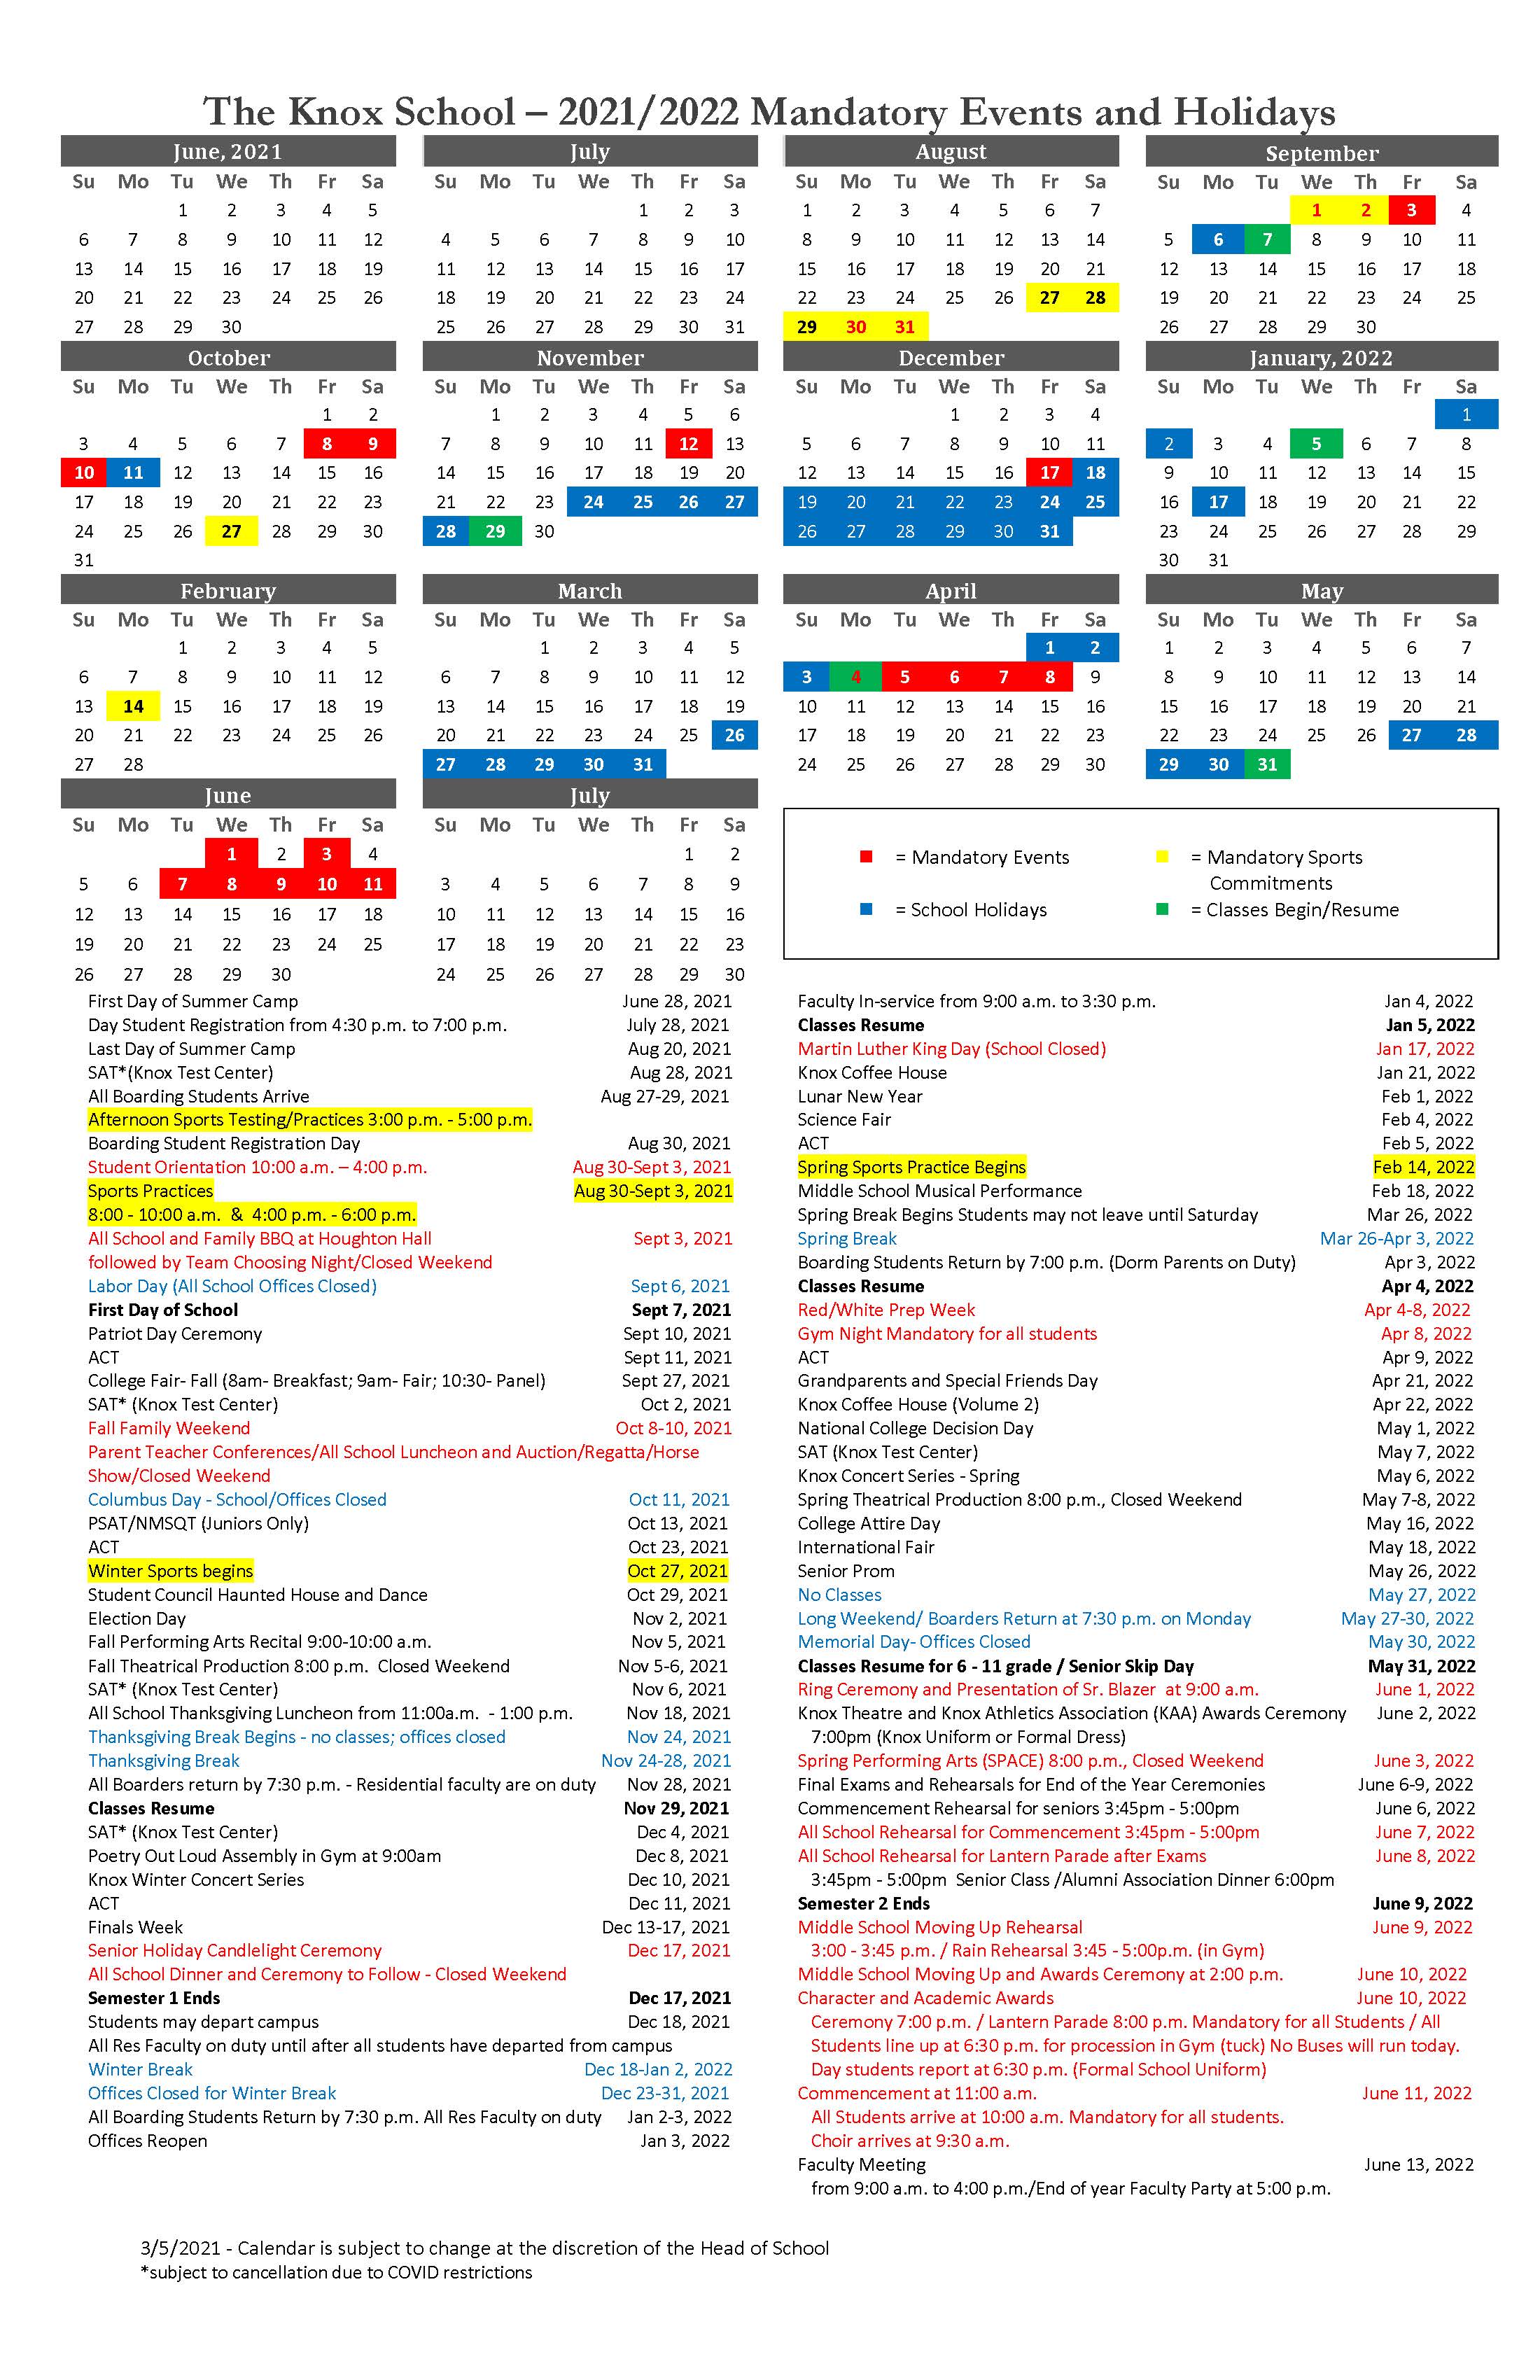 Knox Calendar – The Knox School